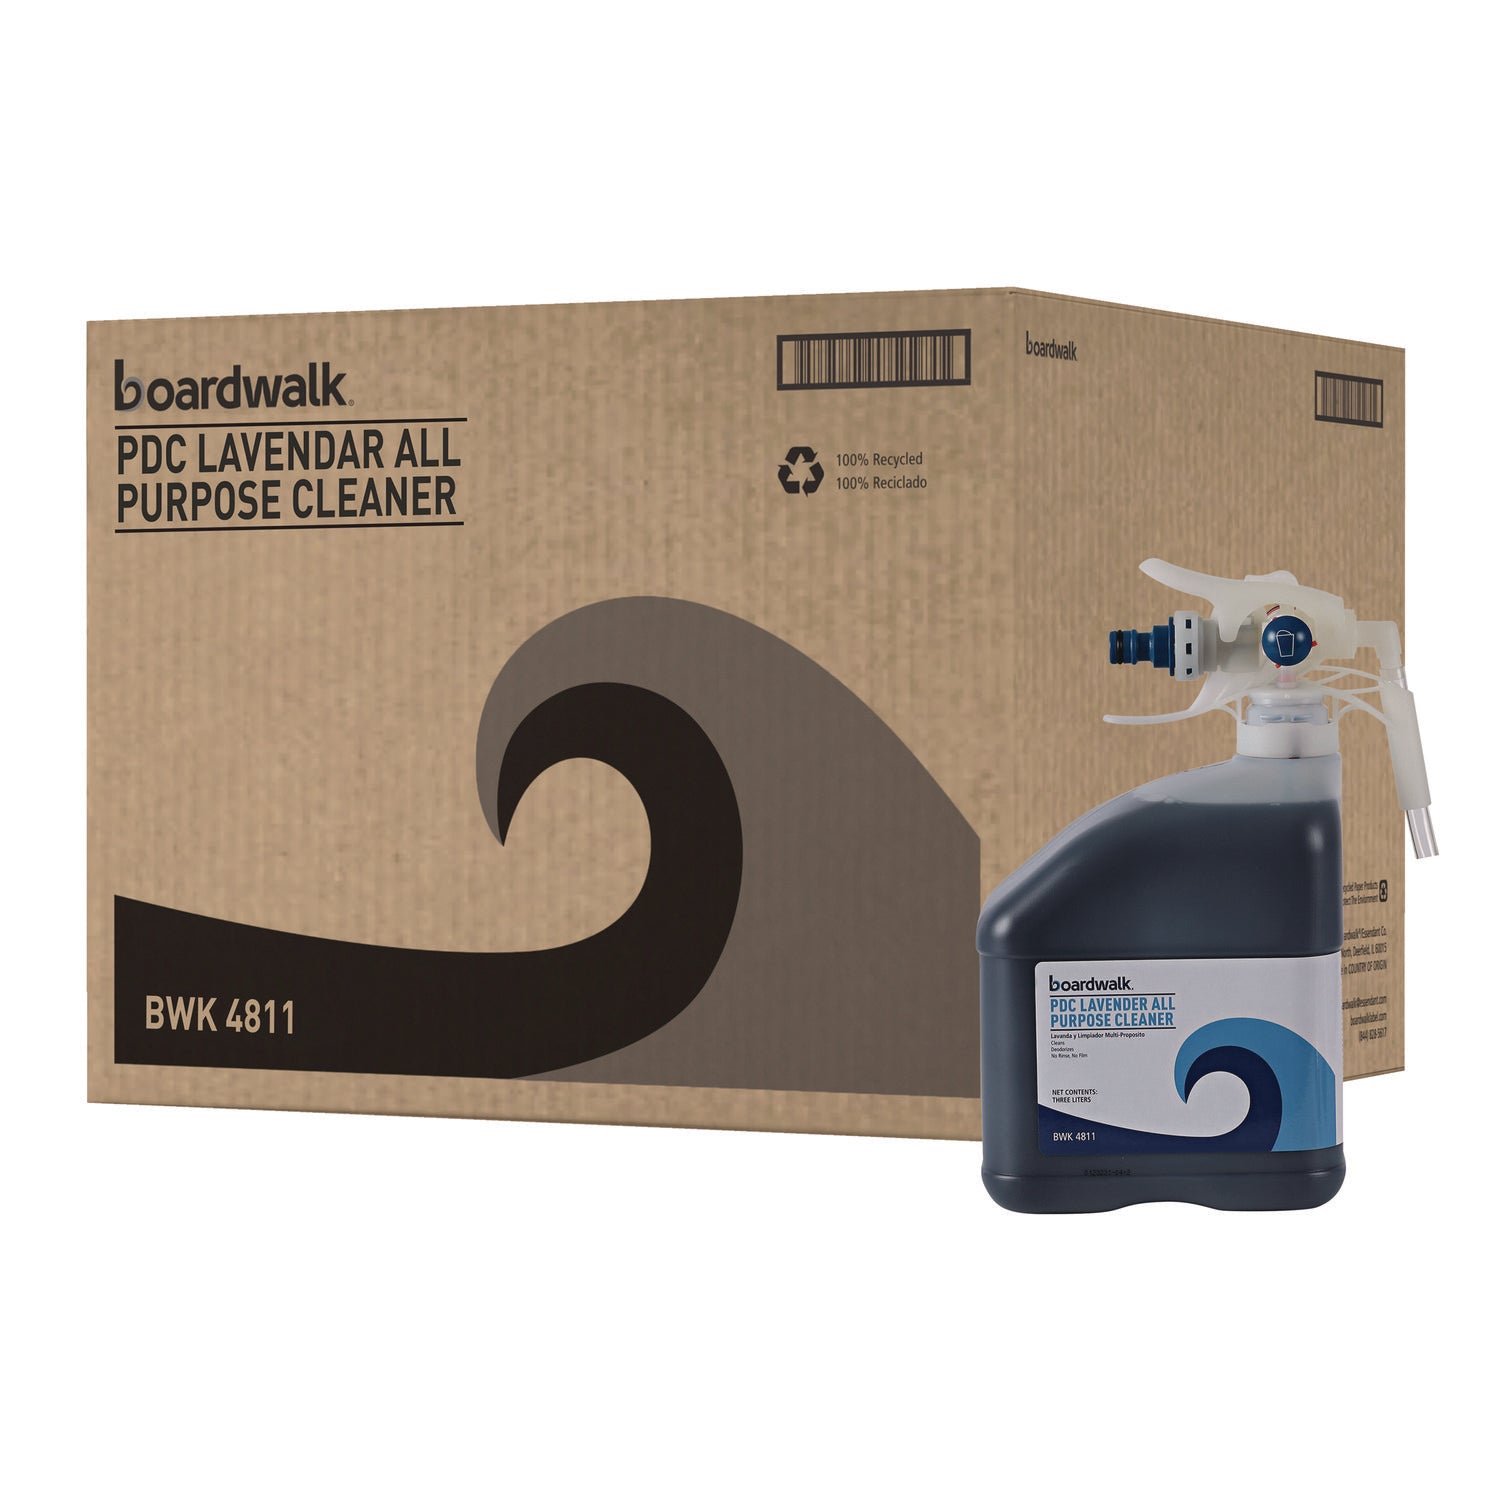 pdc-all-purpose-cleaner-lavender-scent-3-liter-bottle-2-carton_bwk4811 - 1